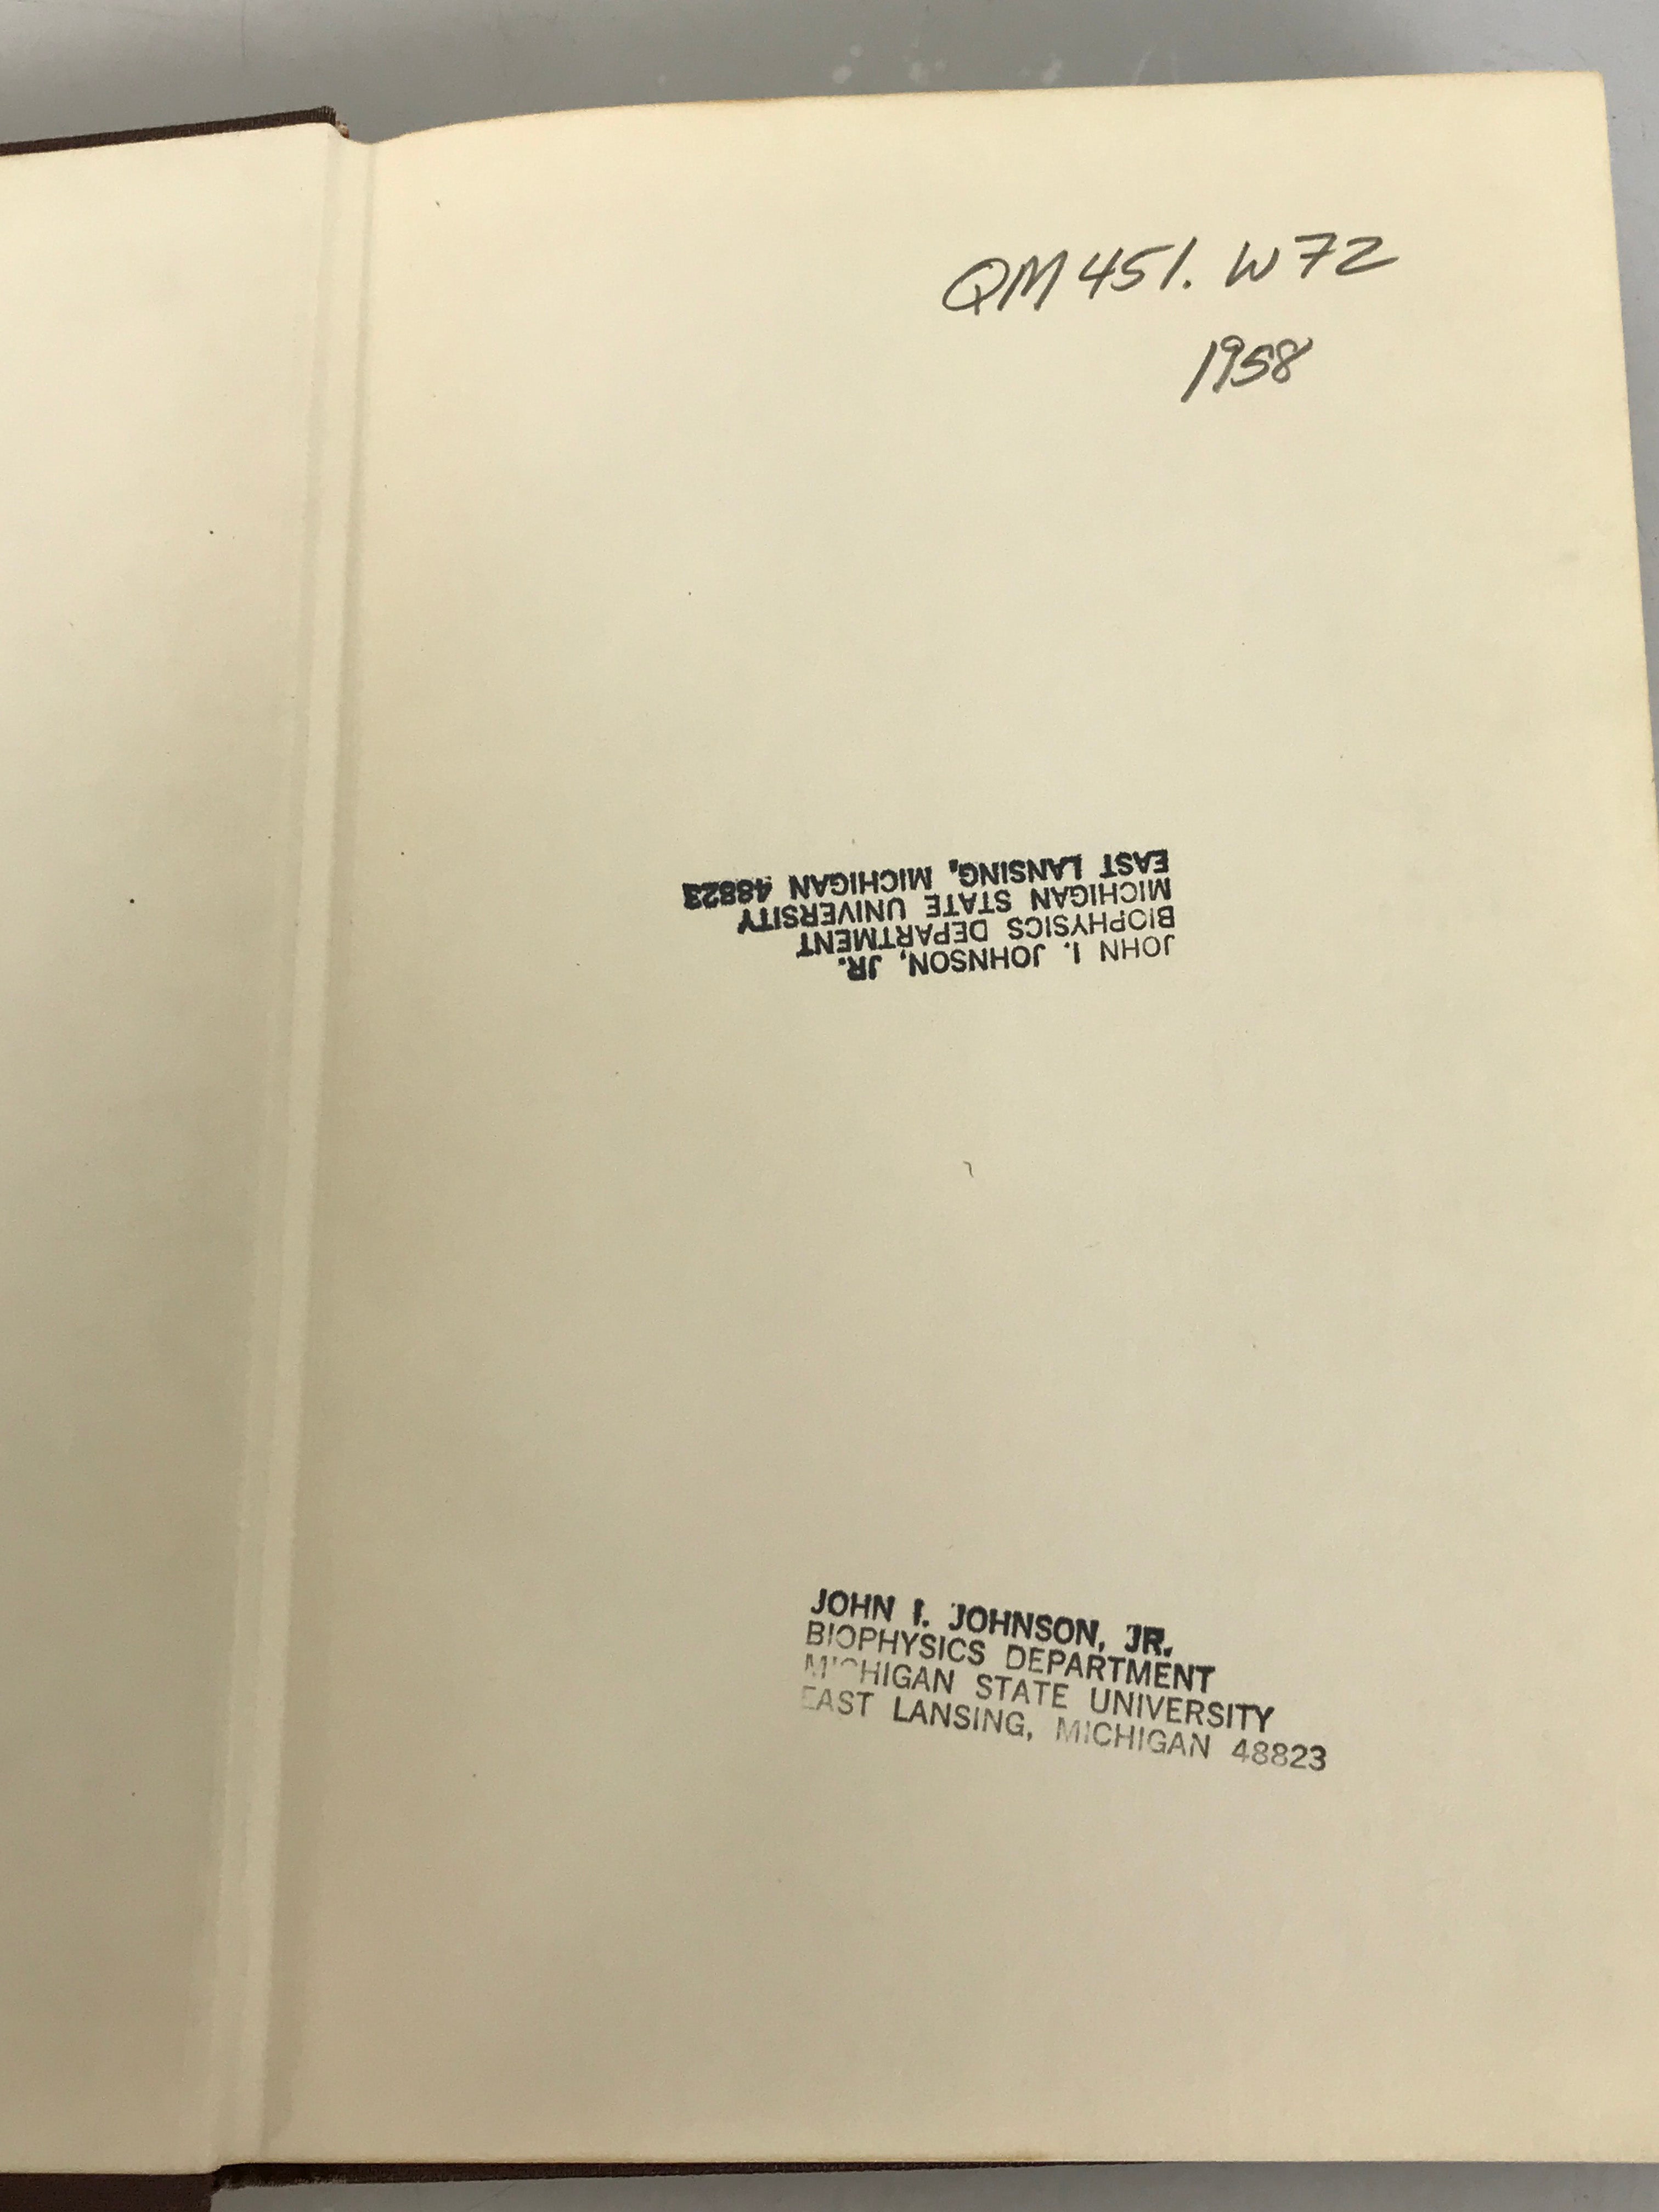 Lot of 2 Charles C Thomas Science Books: Biology of Neuroglia (1958) and Studies on the Diencephalon (1966) HC DJ